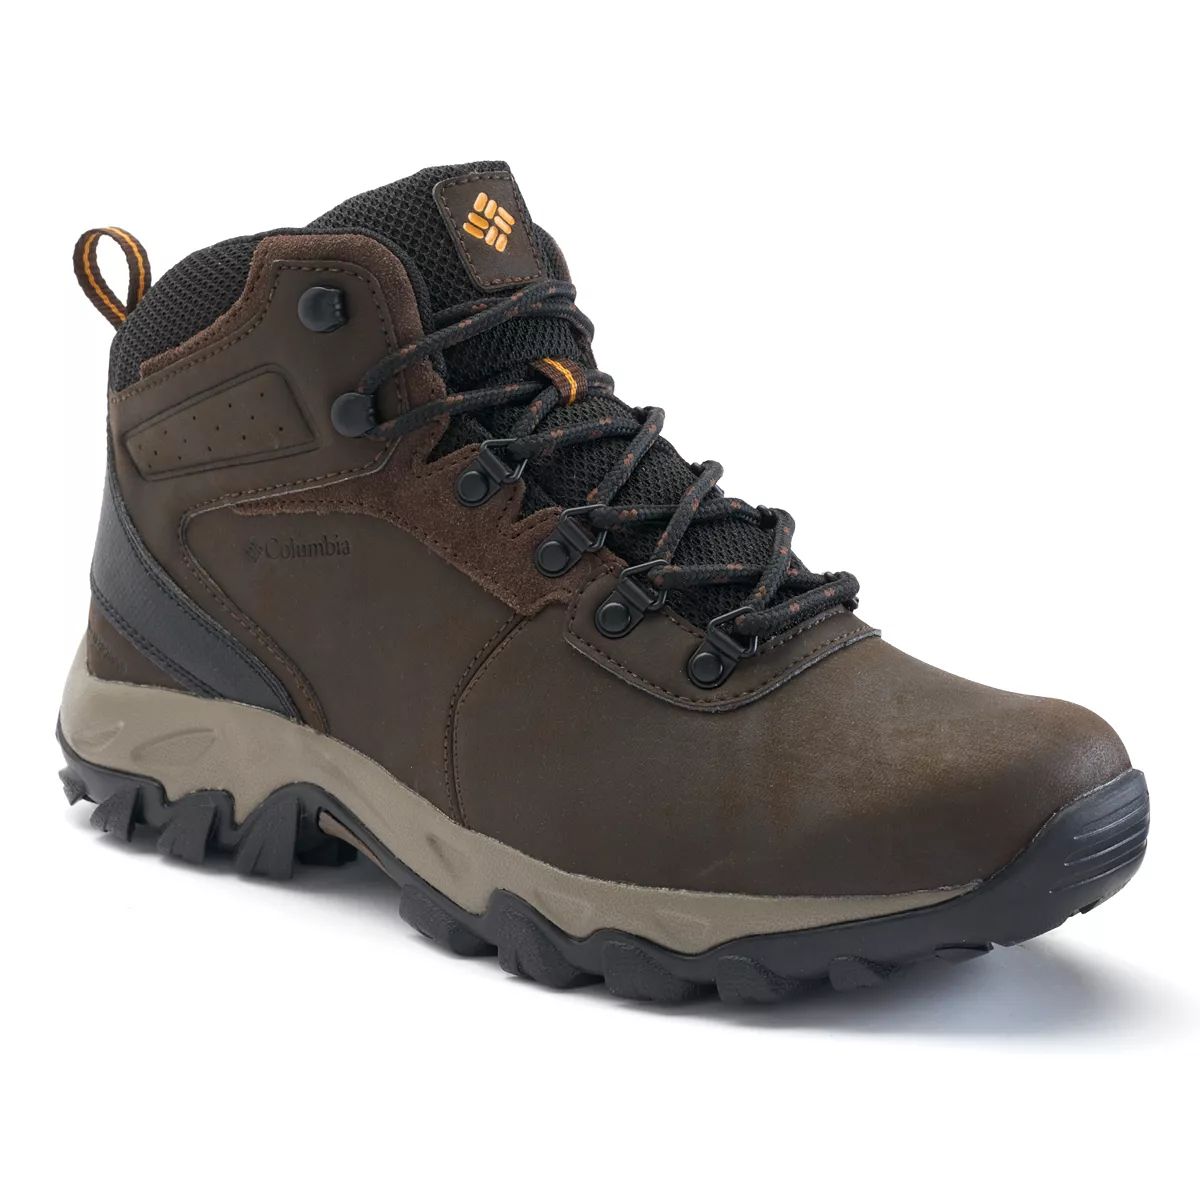 Columbia Newton Ridge Plus II Waterproof Men's Hiking Boots | Kohl's